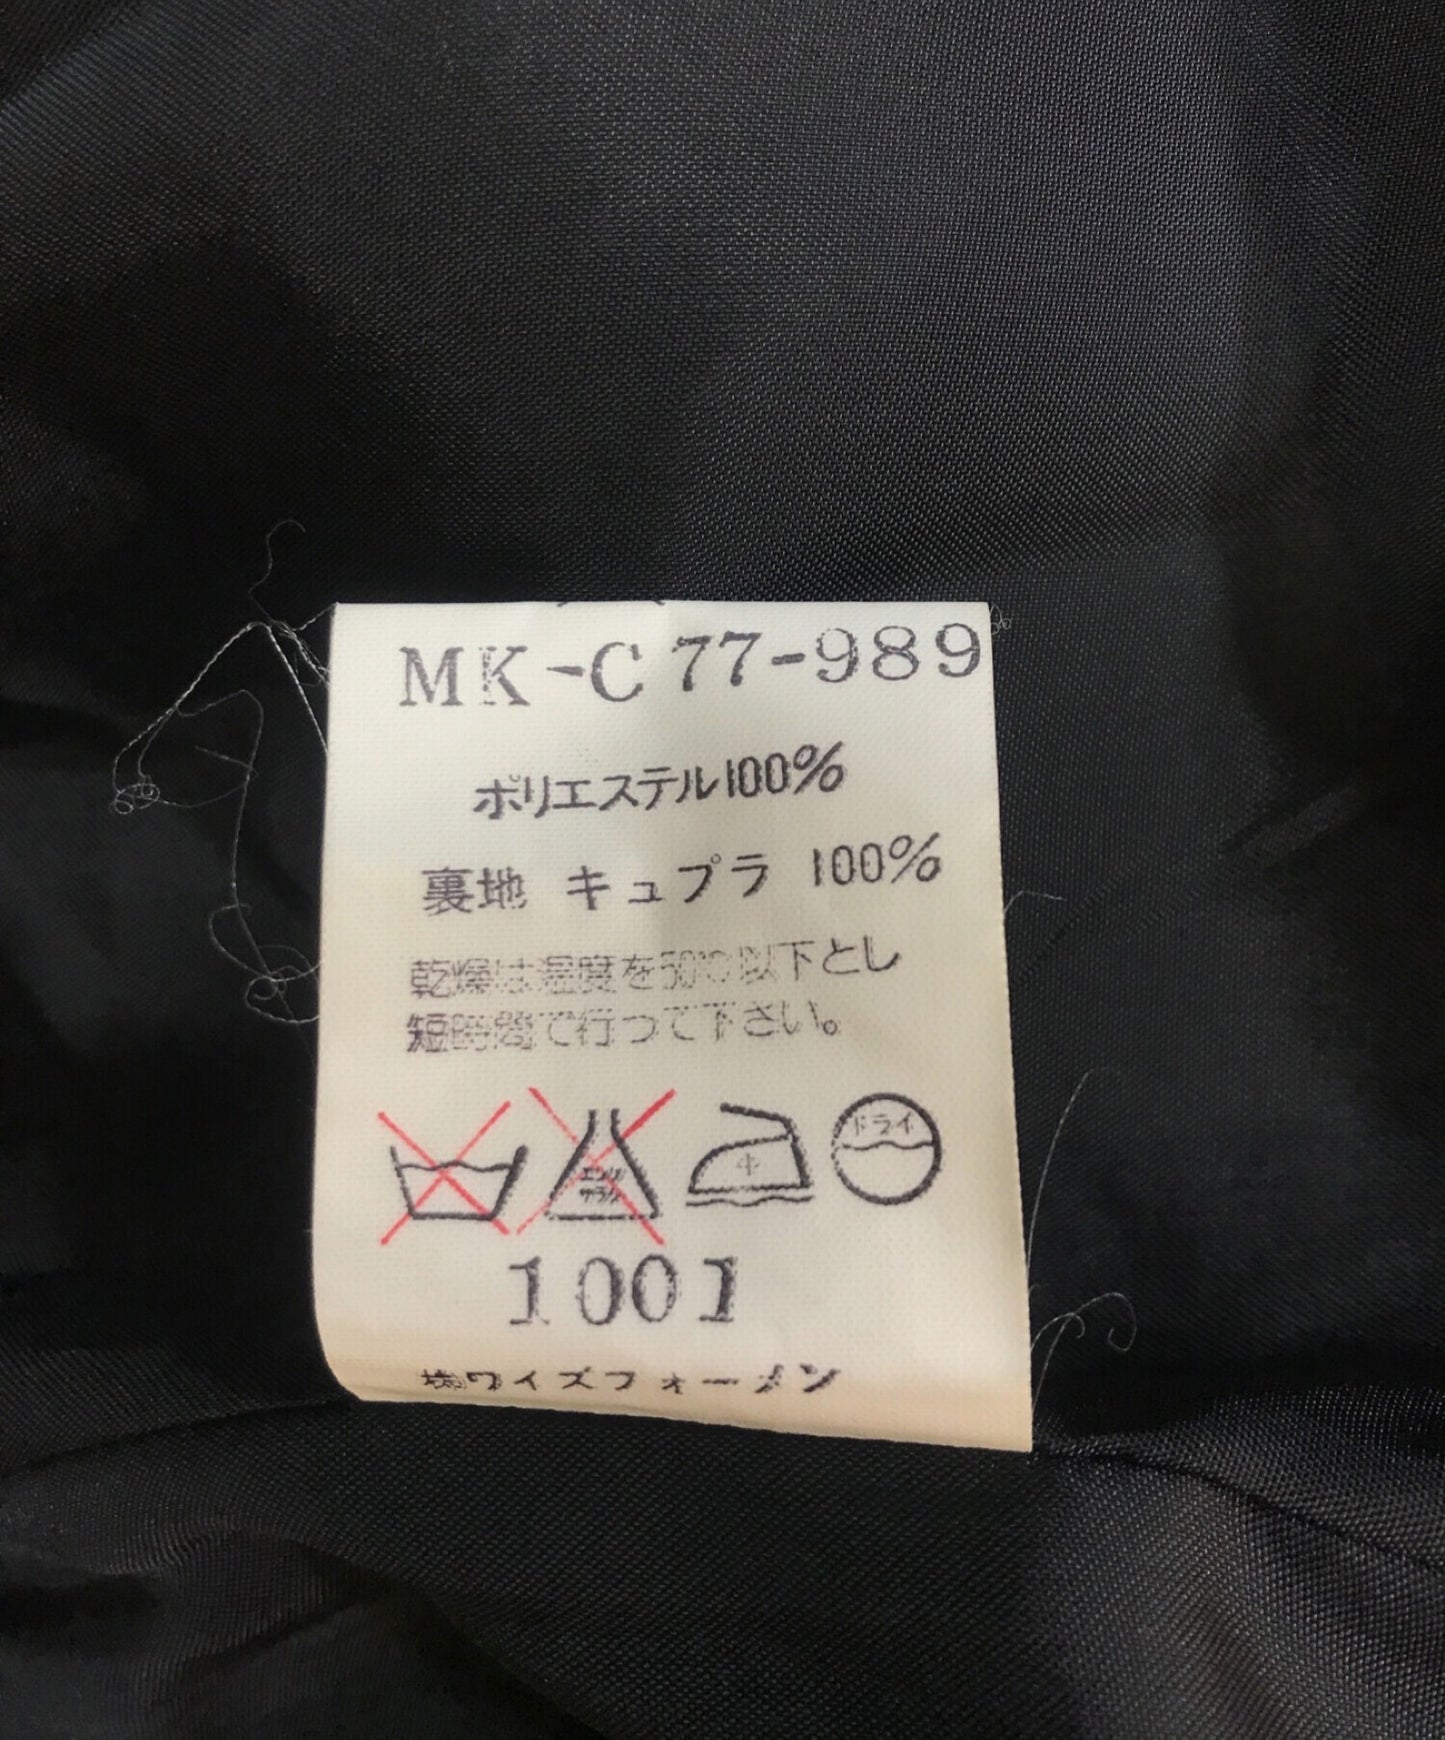 [Pre-owned] YOHJI YAMAMOTO [Secondhand]Staff Coat MK-C77-989